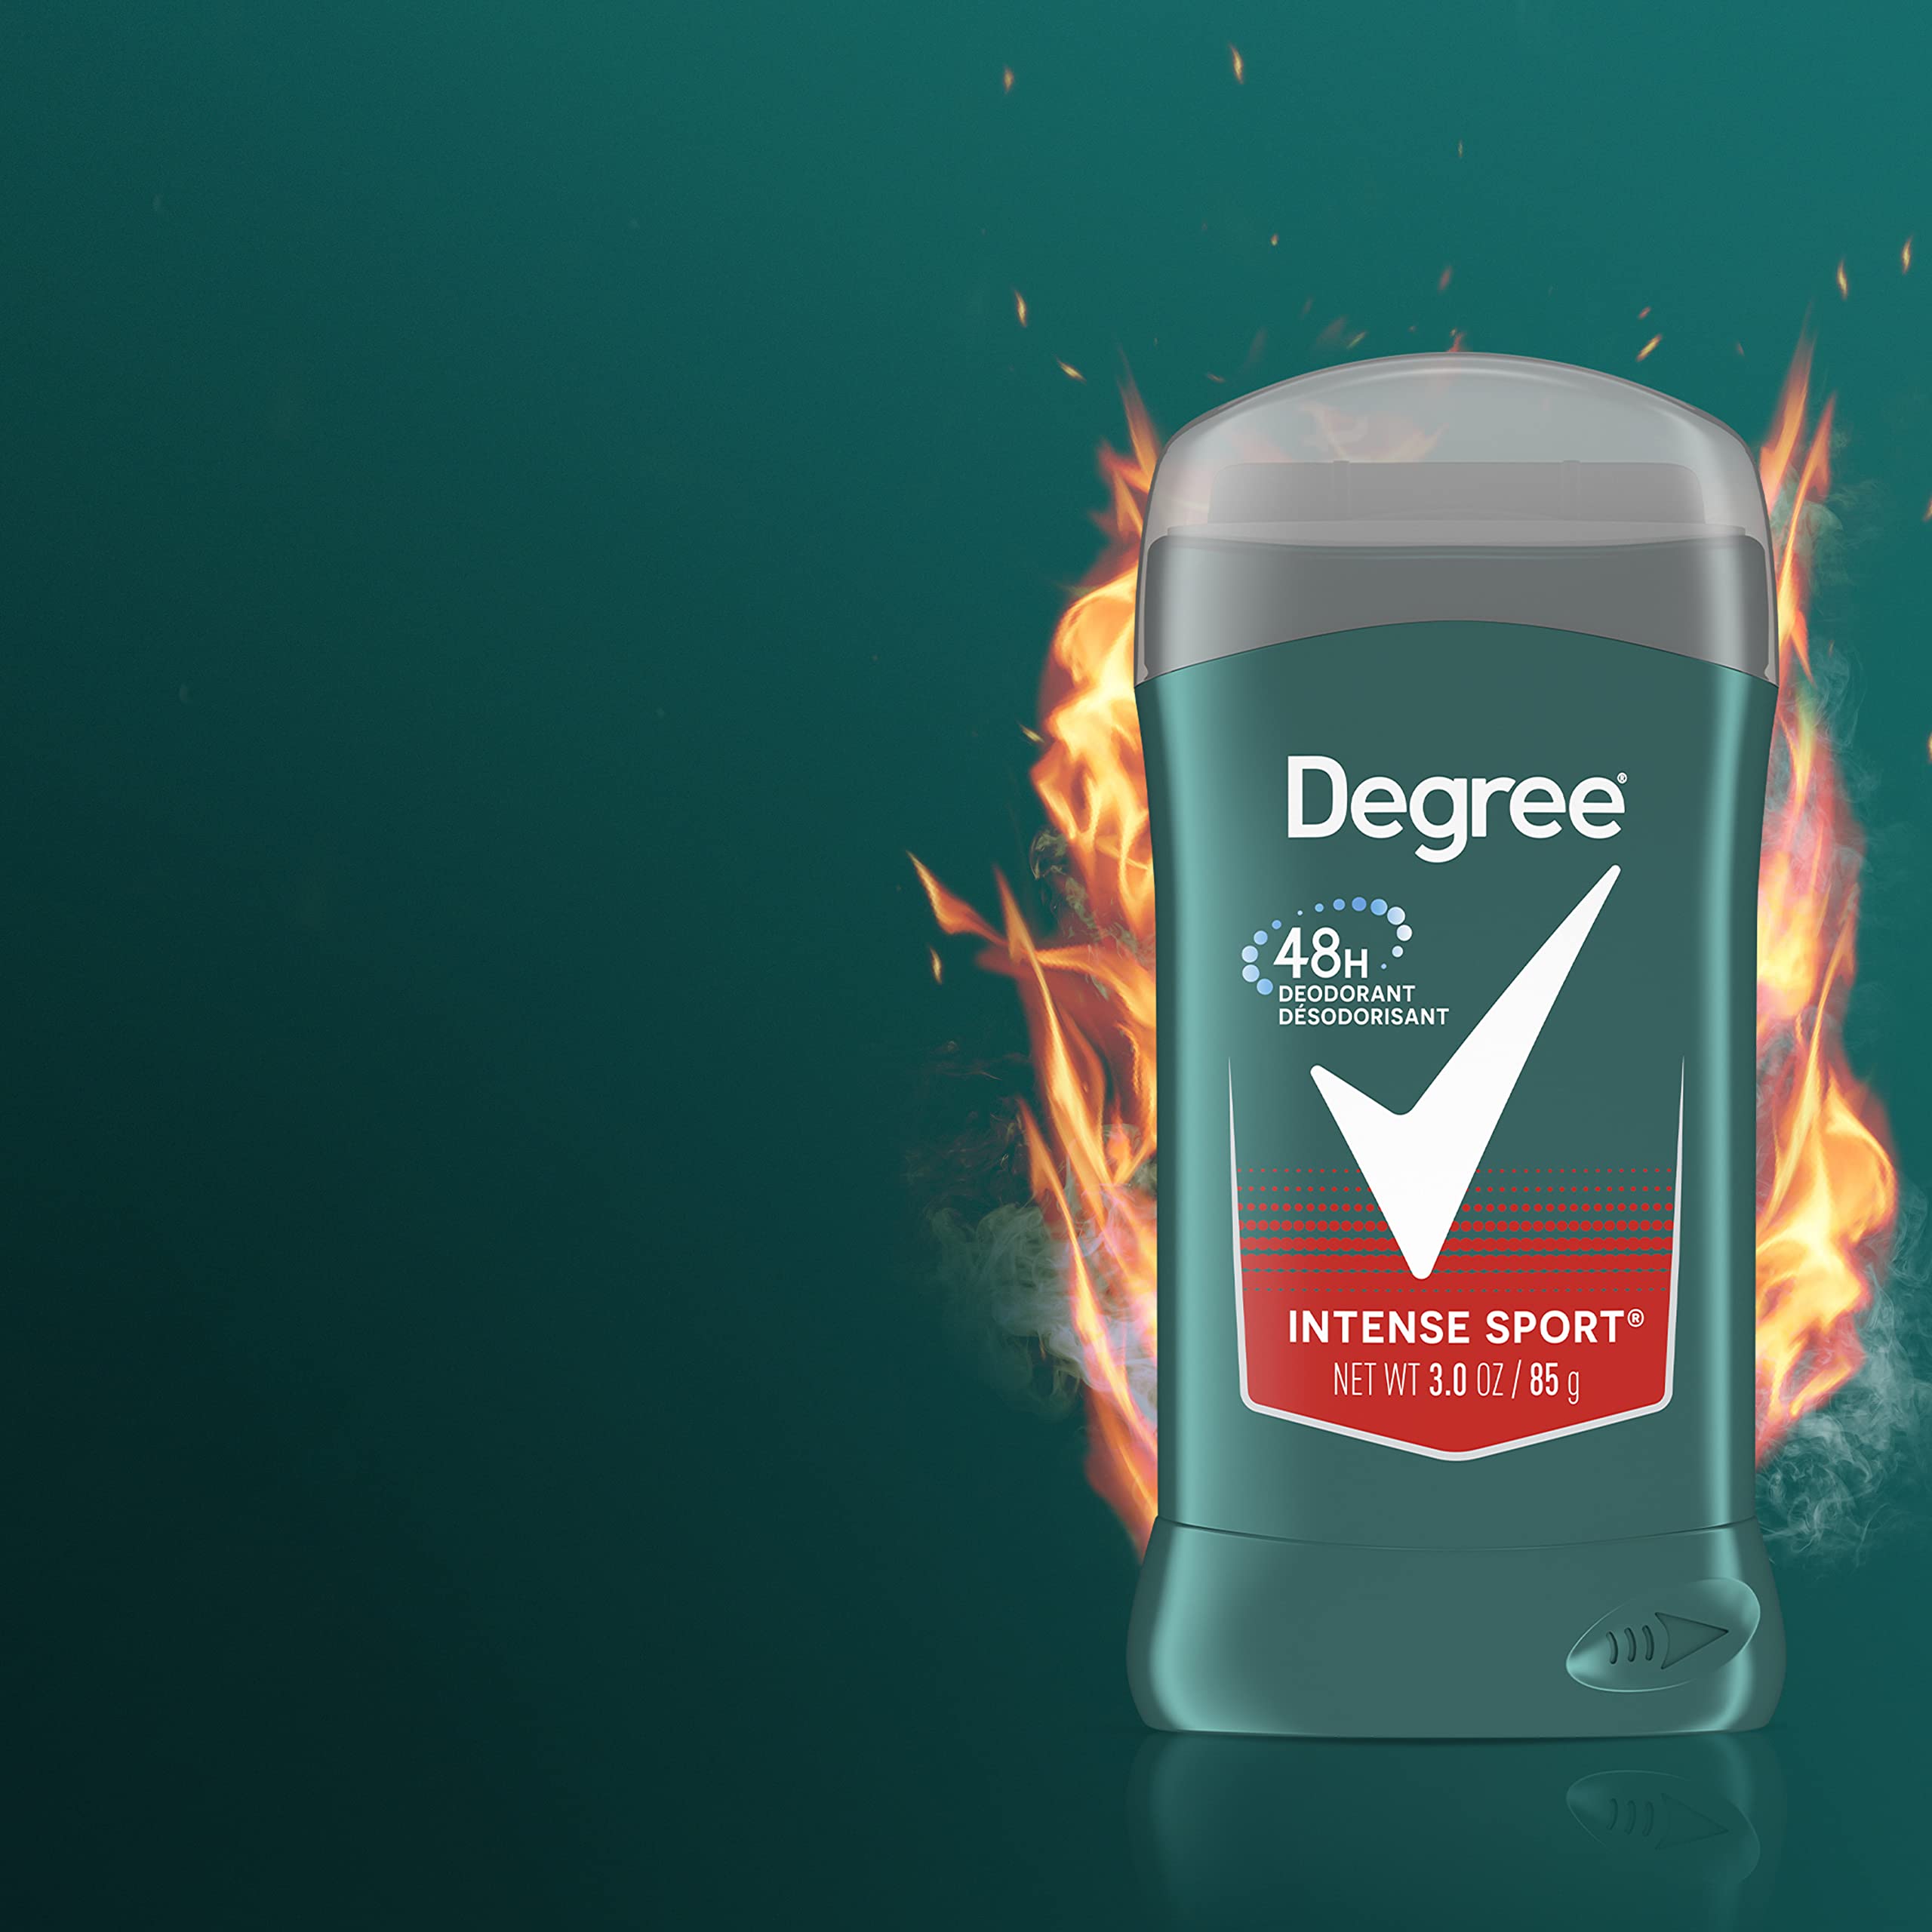 Degree Men Original Deodorant 48-Hour Odor Protection Intense Sport Deodorant For Men 3 Ounce (Pack of 6)